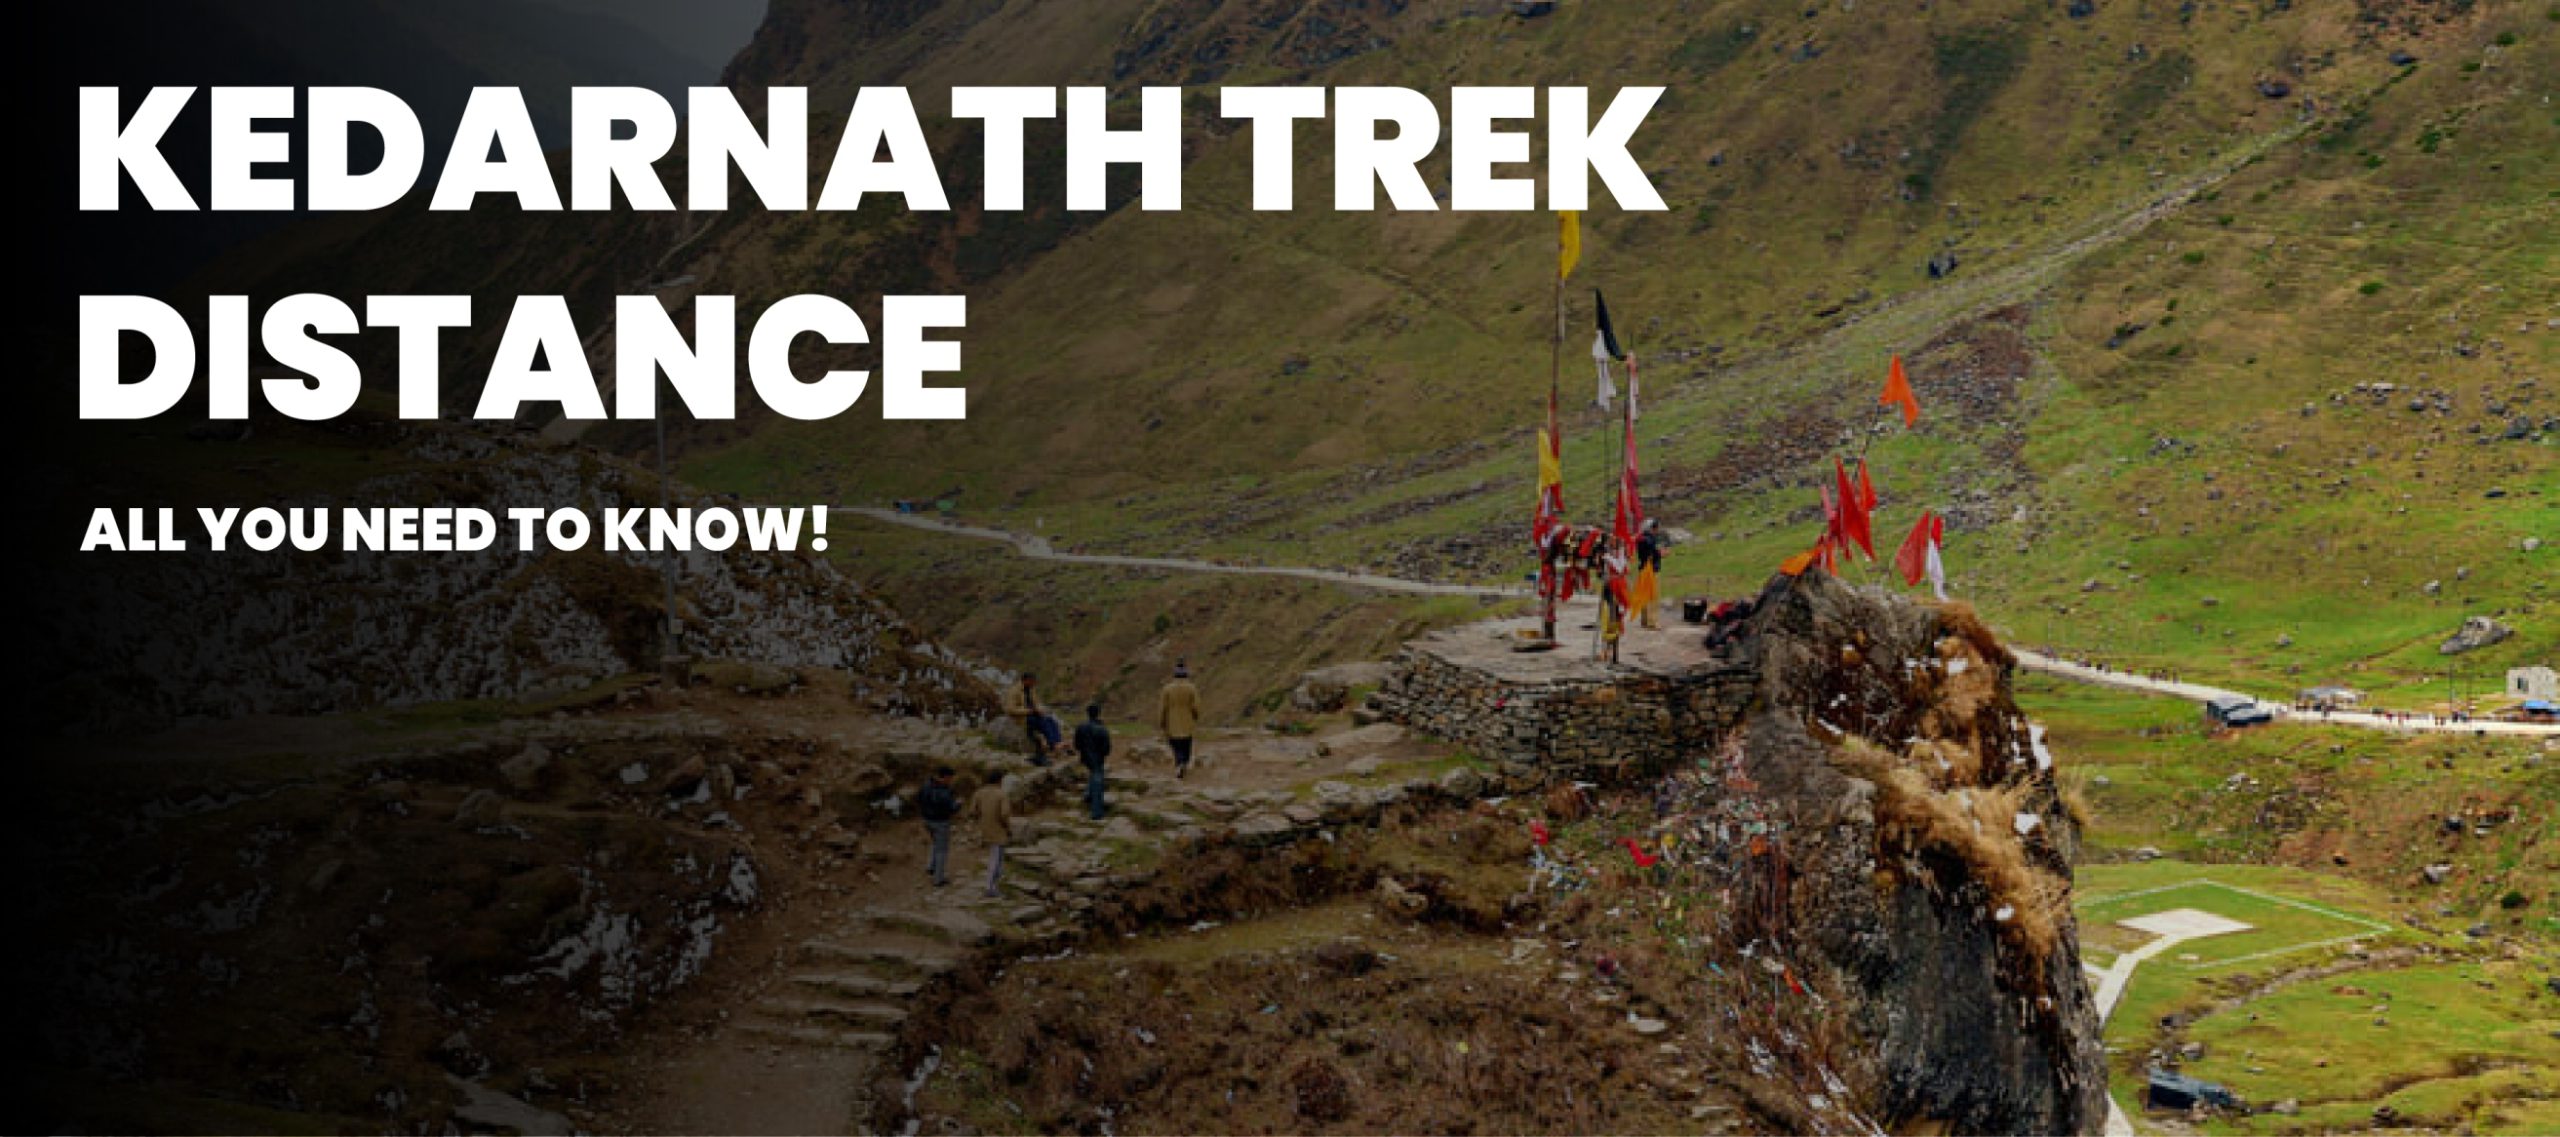 Kedarnath Trek Distance: All You Need To Know!